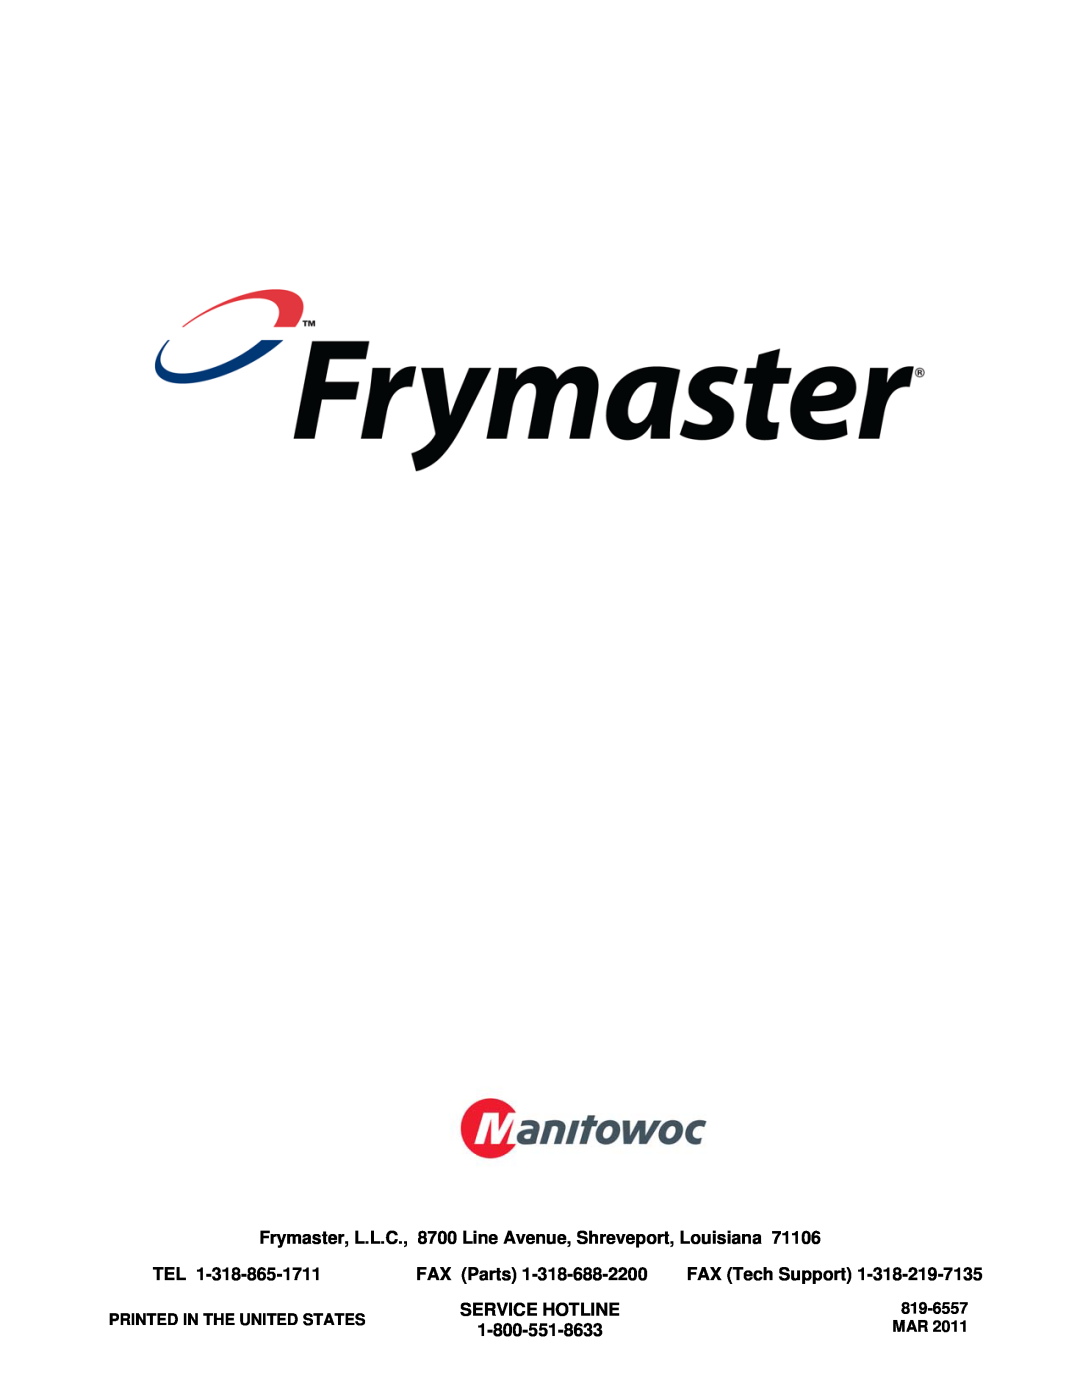 Frymaster BK1814 Frymaster, L.L.C., 8700 Line Avenue, Shreveport, Louisiana, FAX Parts, FAX Tech Support, Service Hotline 